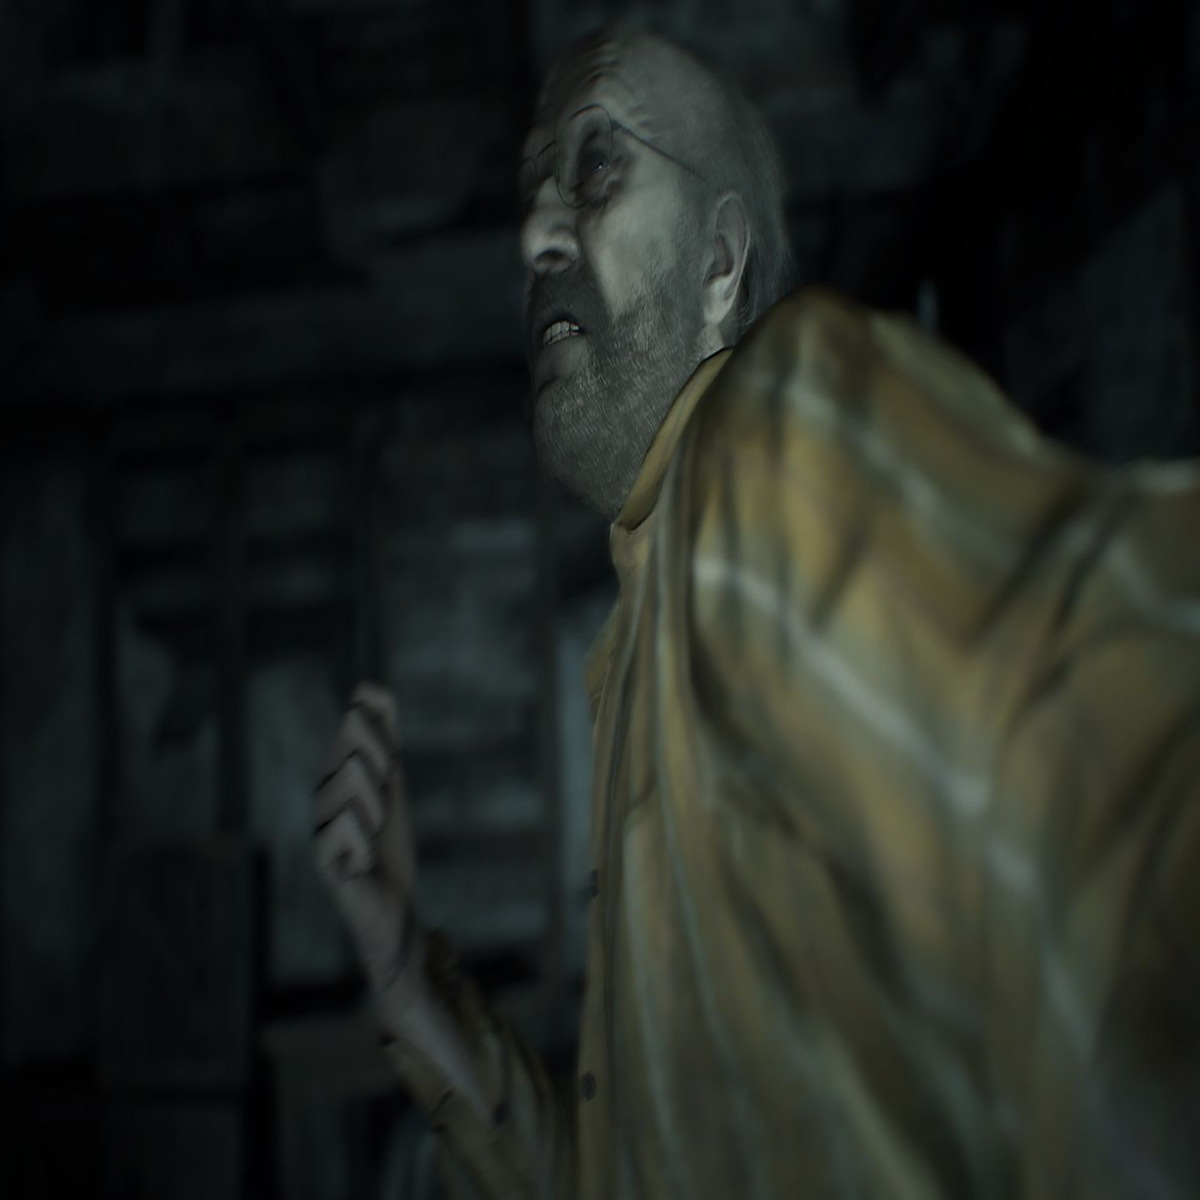 Resident Evil 7: Biohazard Review - GameSpot